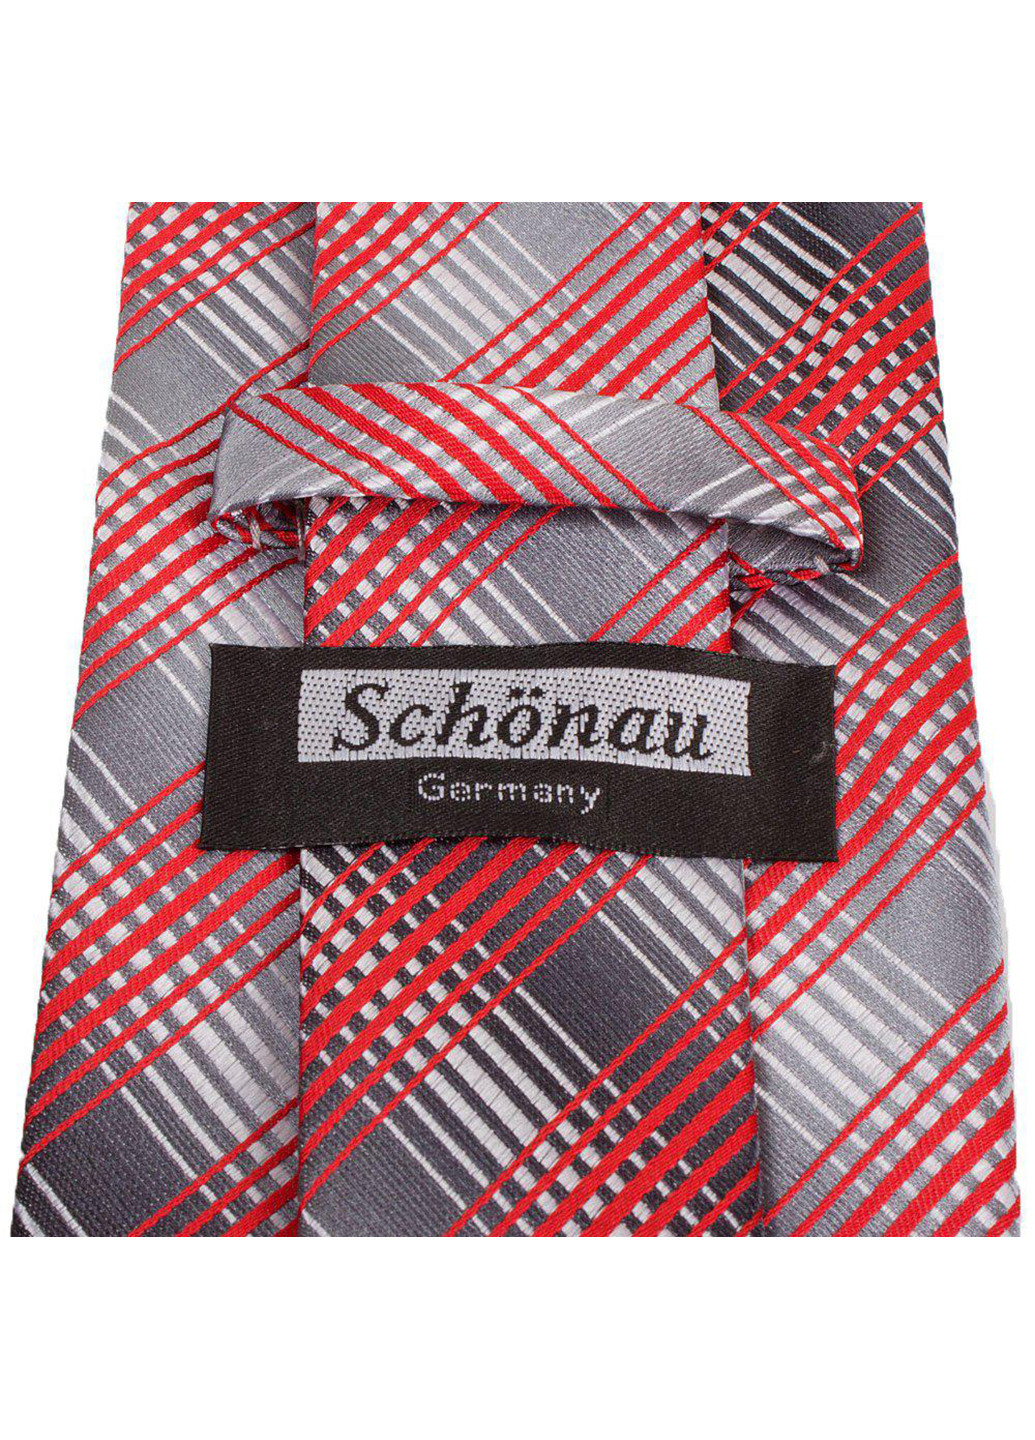 Мужской галстук 149,5 см Schonau & Houcken (252129864)